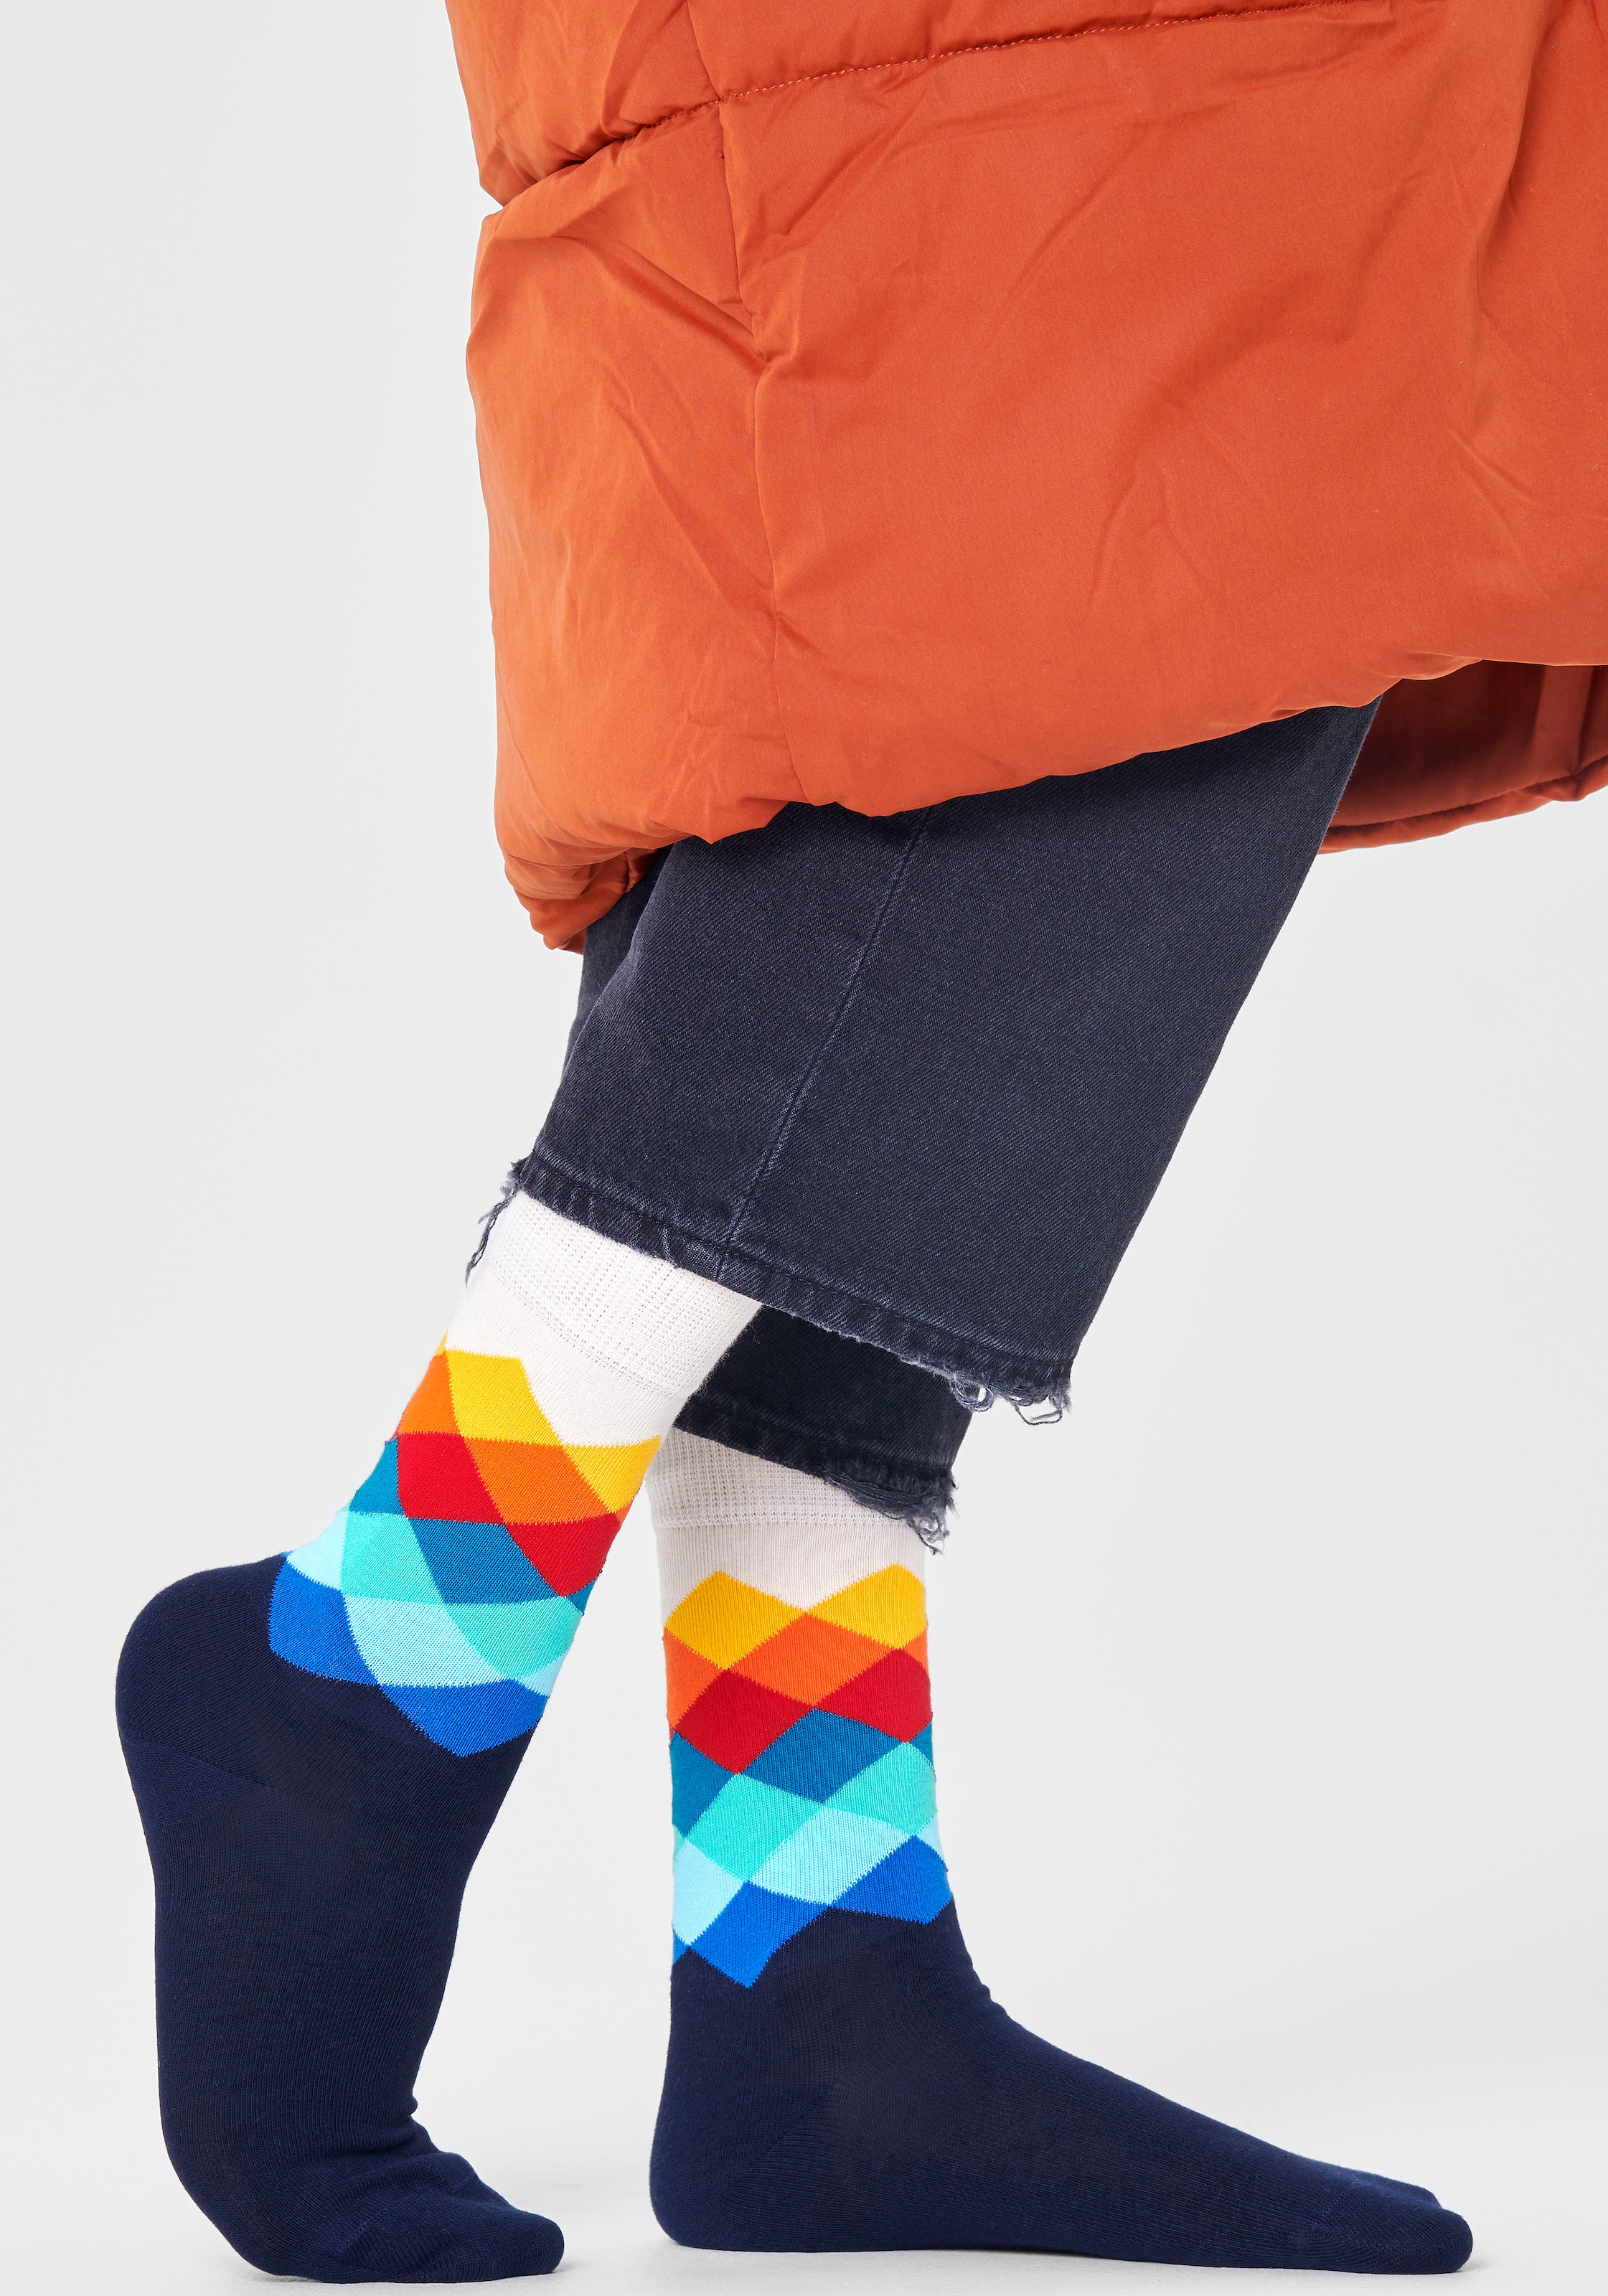 Strip Socks Onlineshop walking (3 | im Socks Happy Socken, Dot & I\'m Diamond Big Paar), & Faded